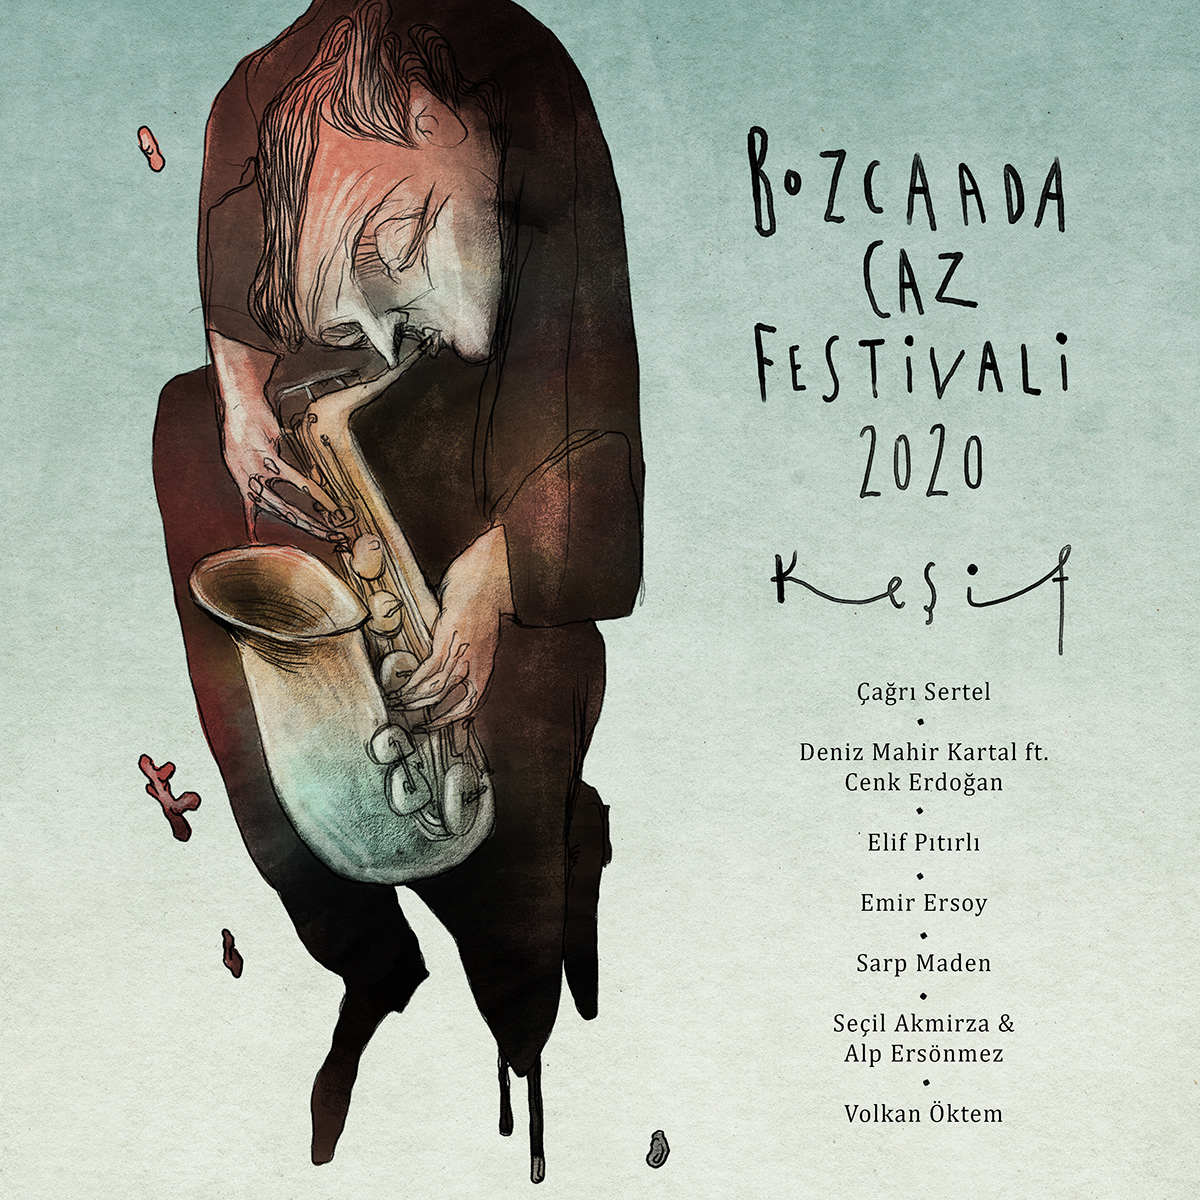 album cover bozcaada caz festivali Cover Art drum festival jazz music Piano saxophone